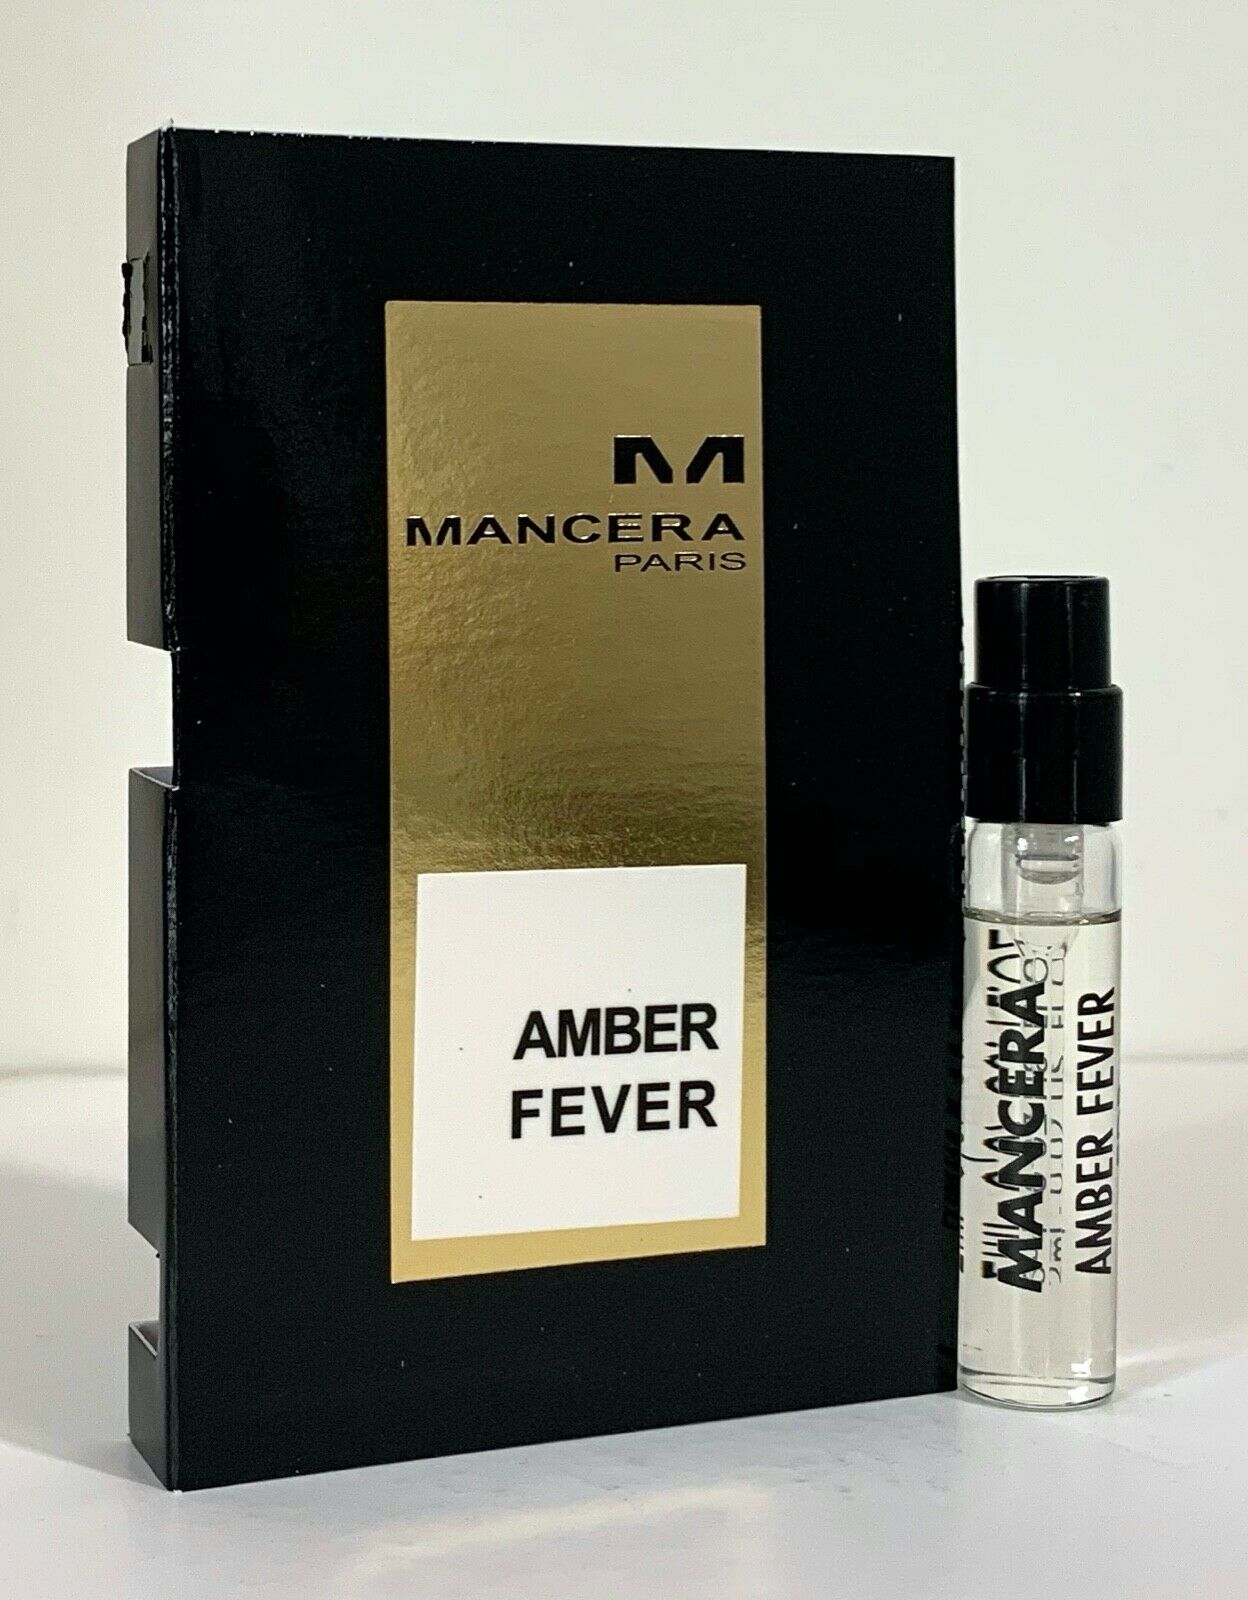 Mancera Amber Fever officiellt doftprov 2ml 0.06 fl. oz., Mancera Amber Fever 2 ml 0.06 fl. uns. officiellt parfymprov